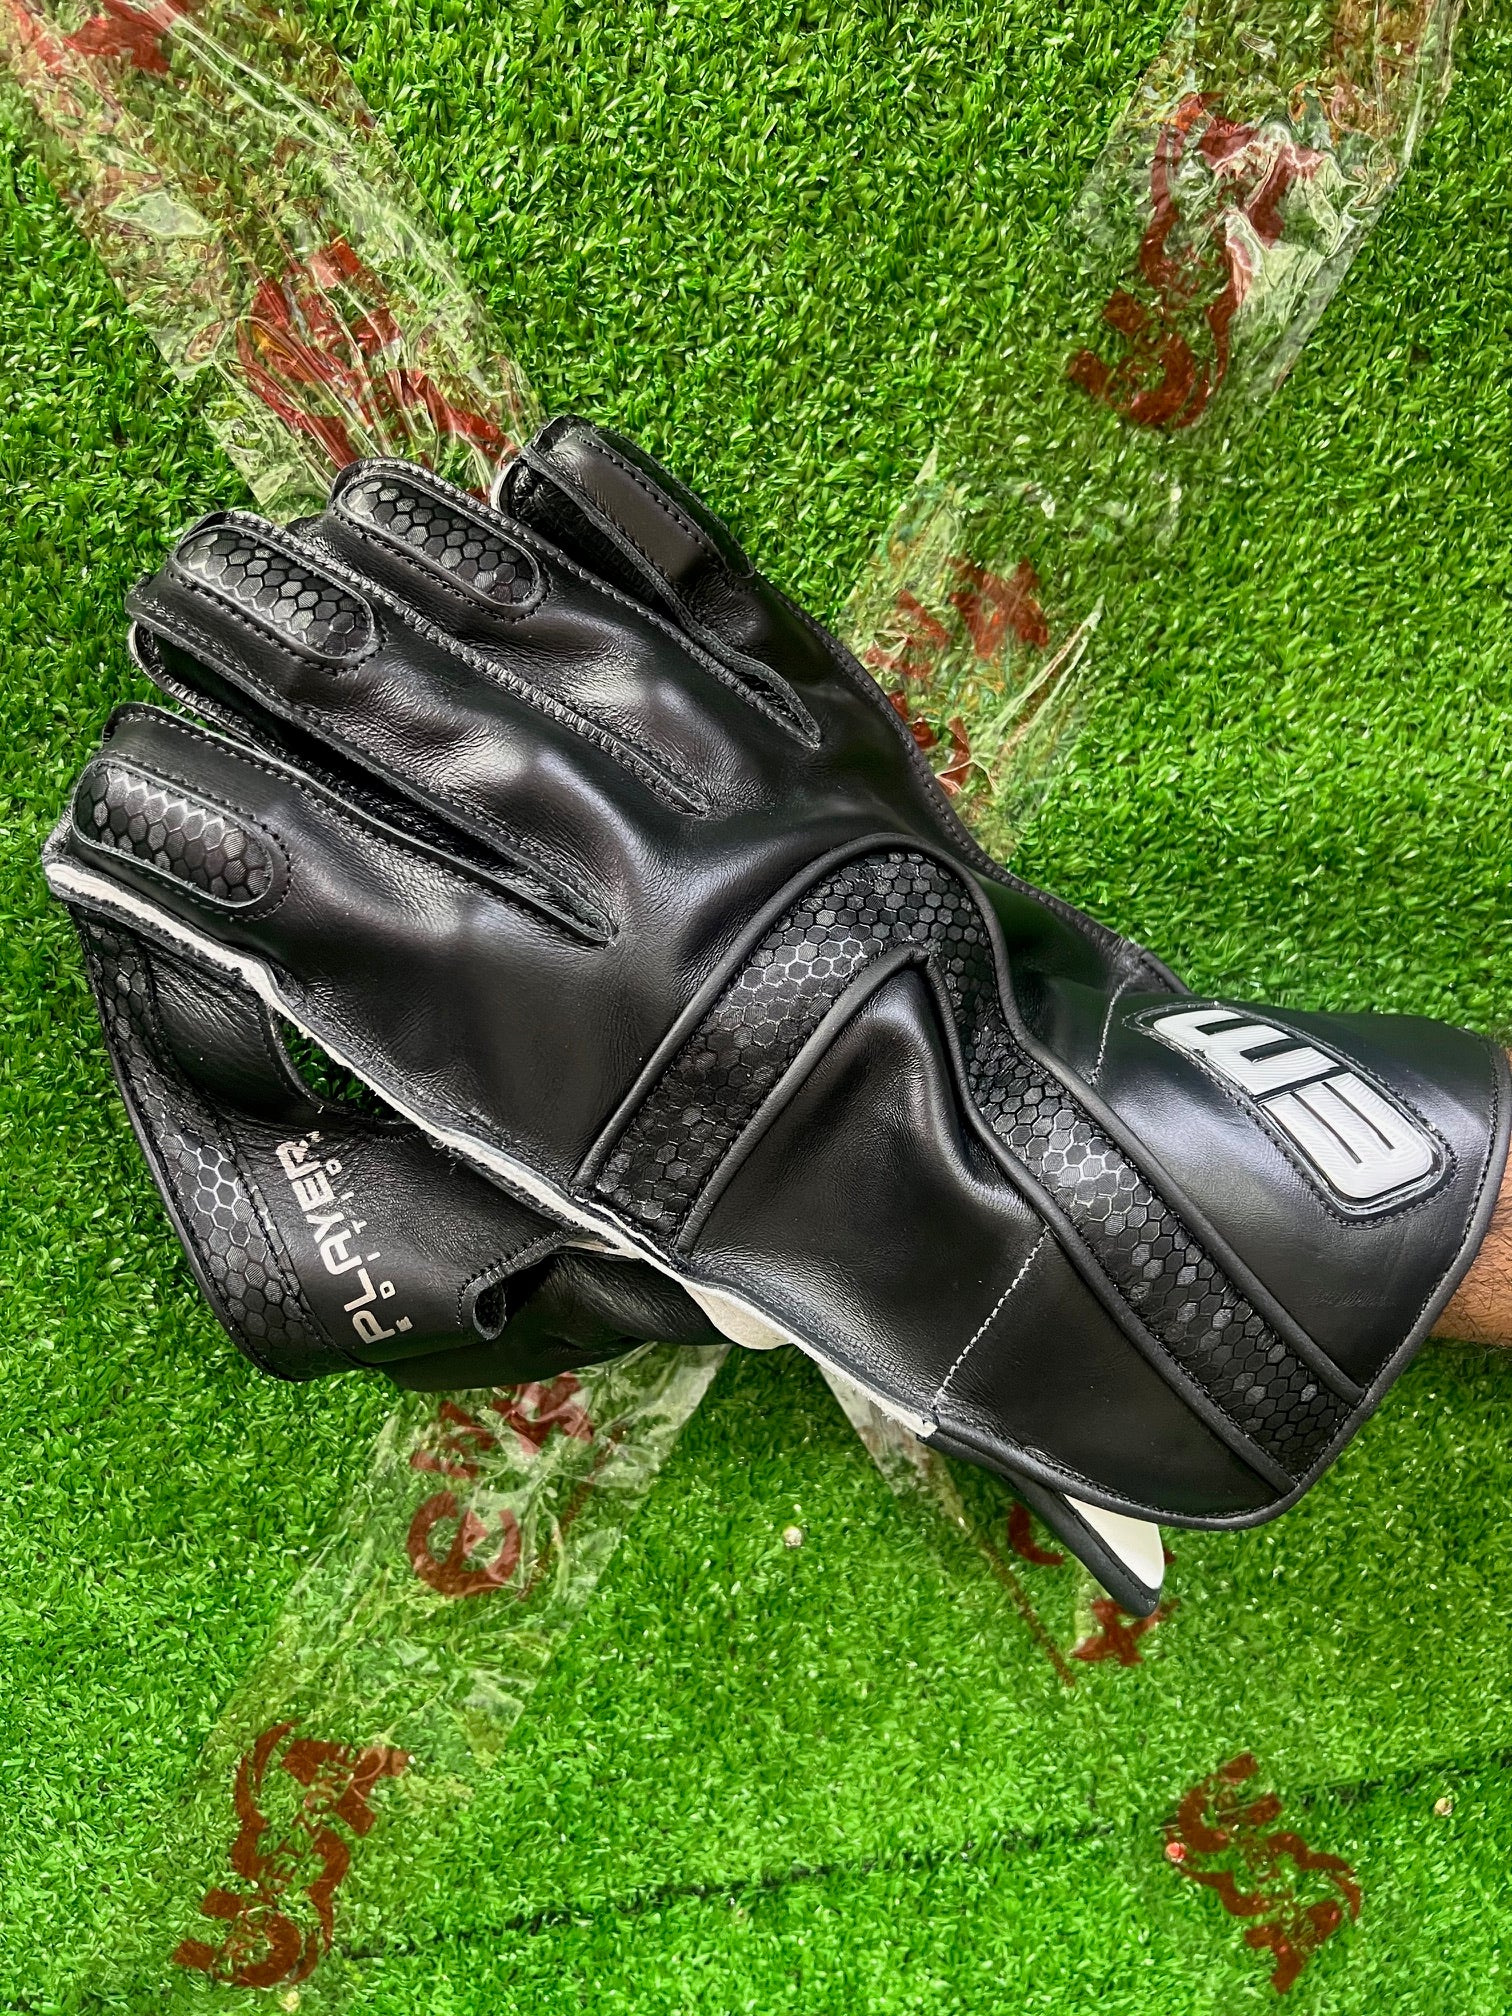 EM MSD DHONI Player Black Wicket Keeping Gloves -2024